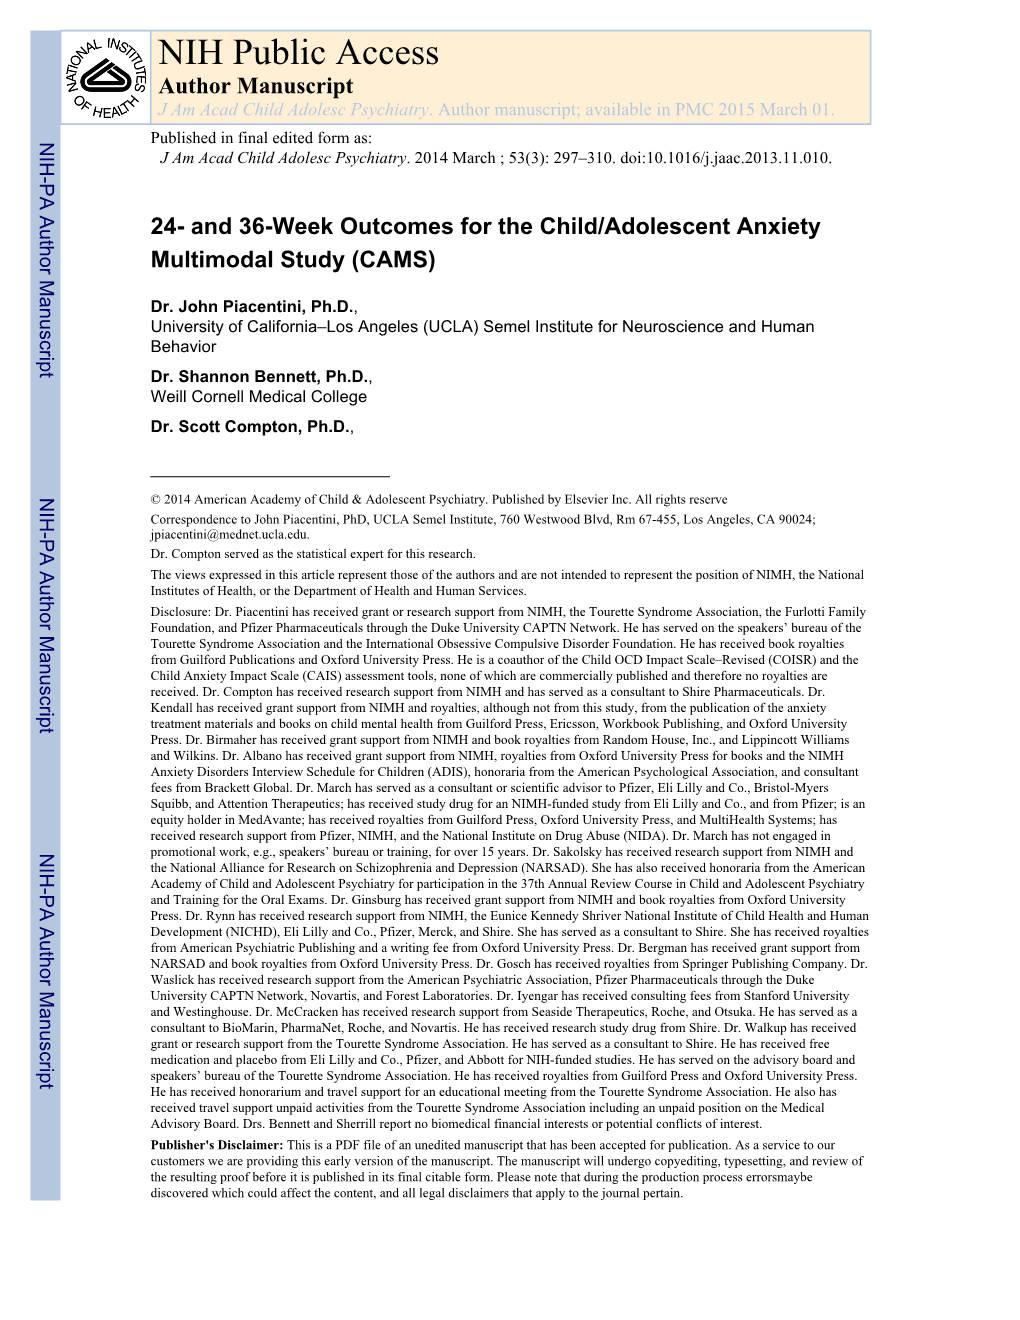 NIH Public Access Author Manuscript J Am Acad Child Adolesc Psychiatry